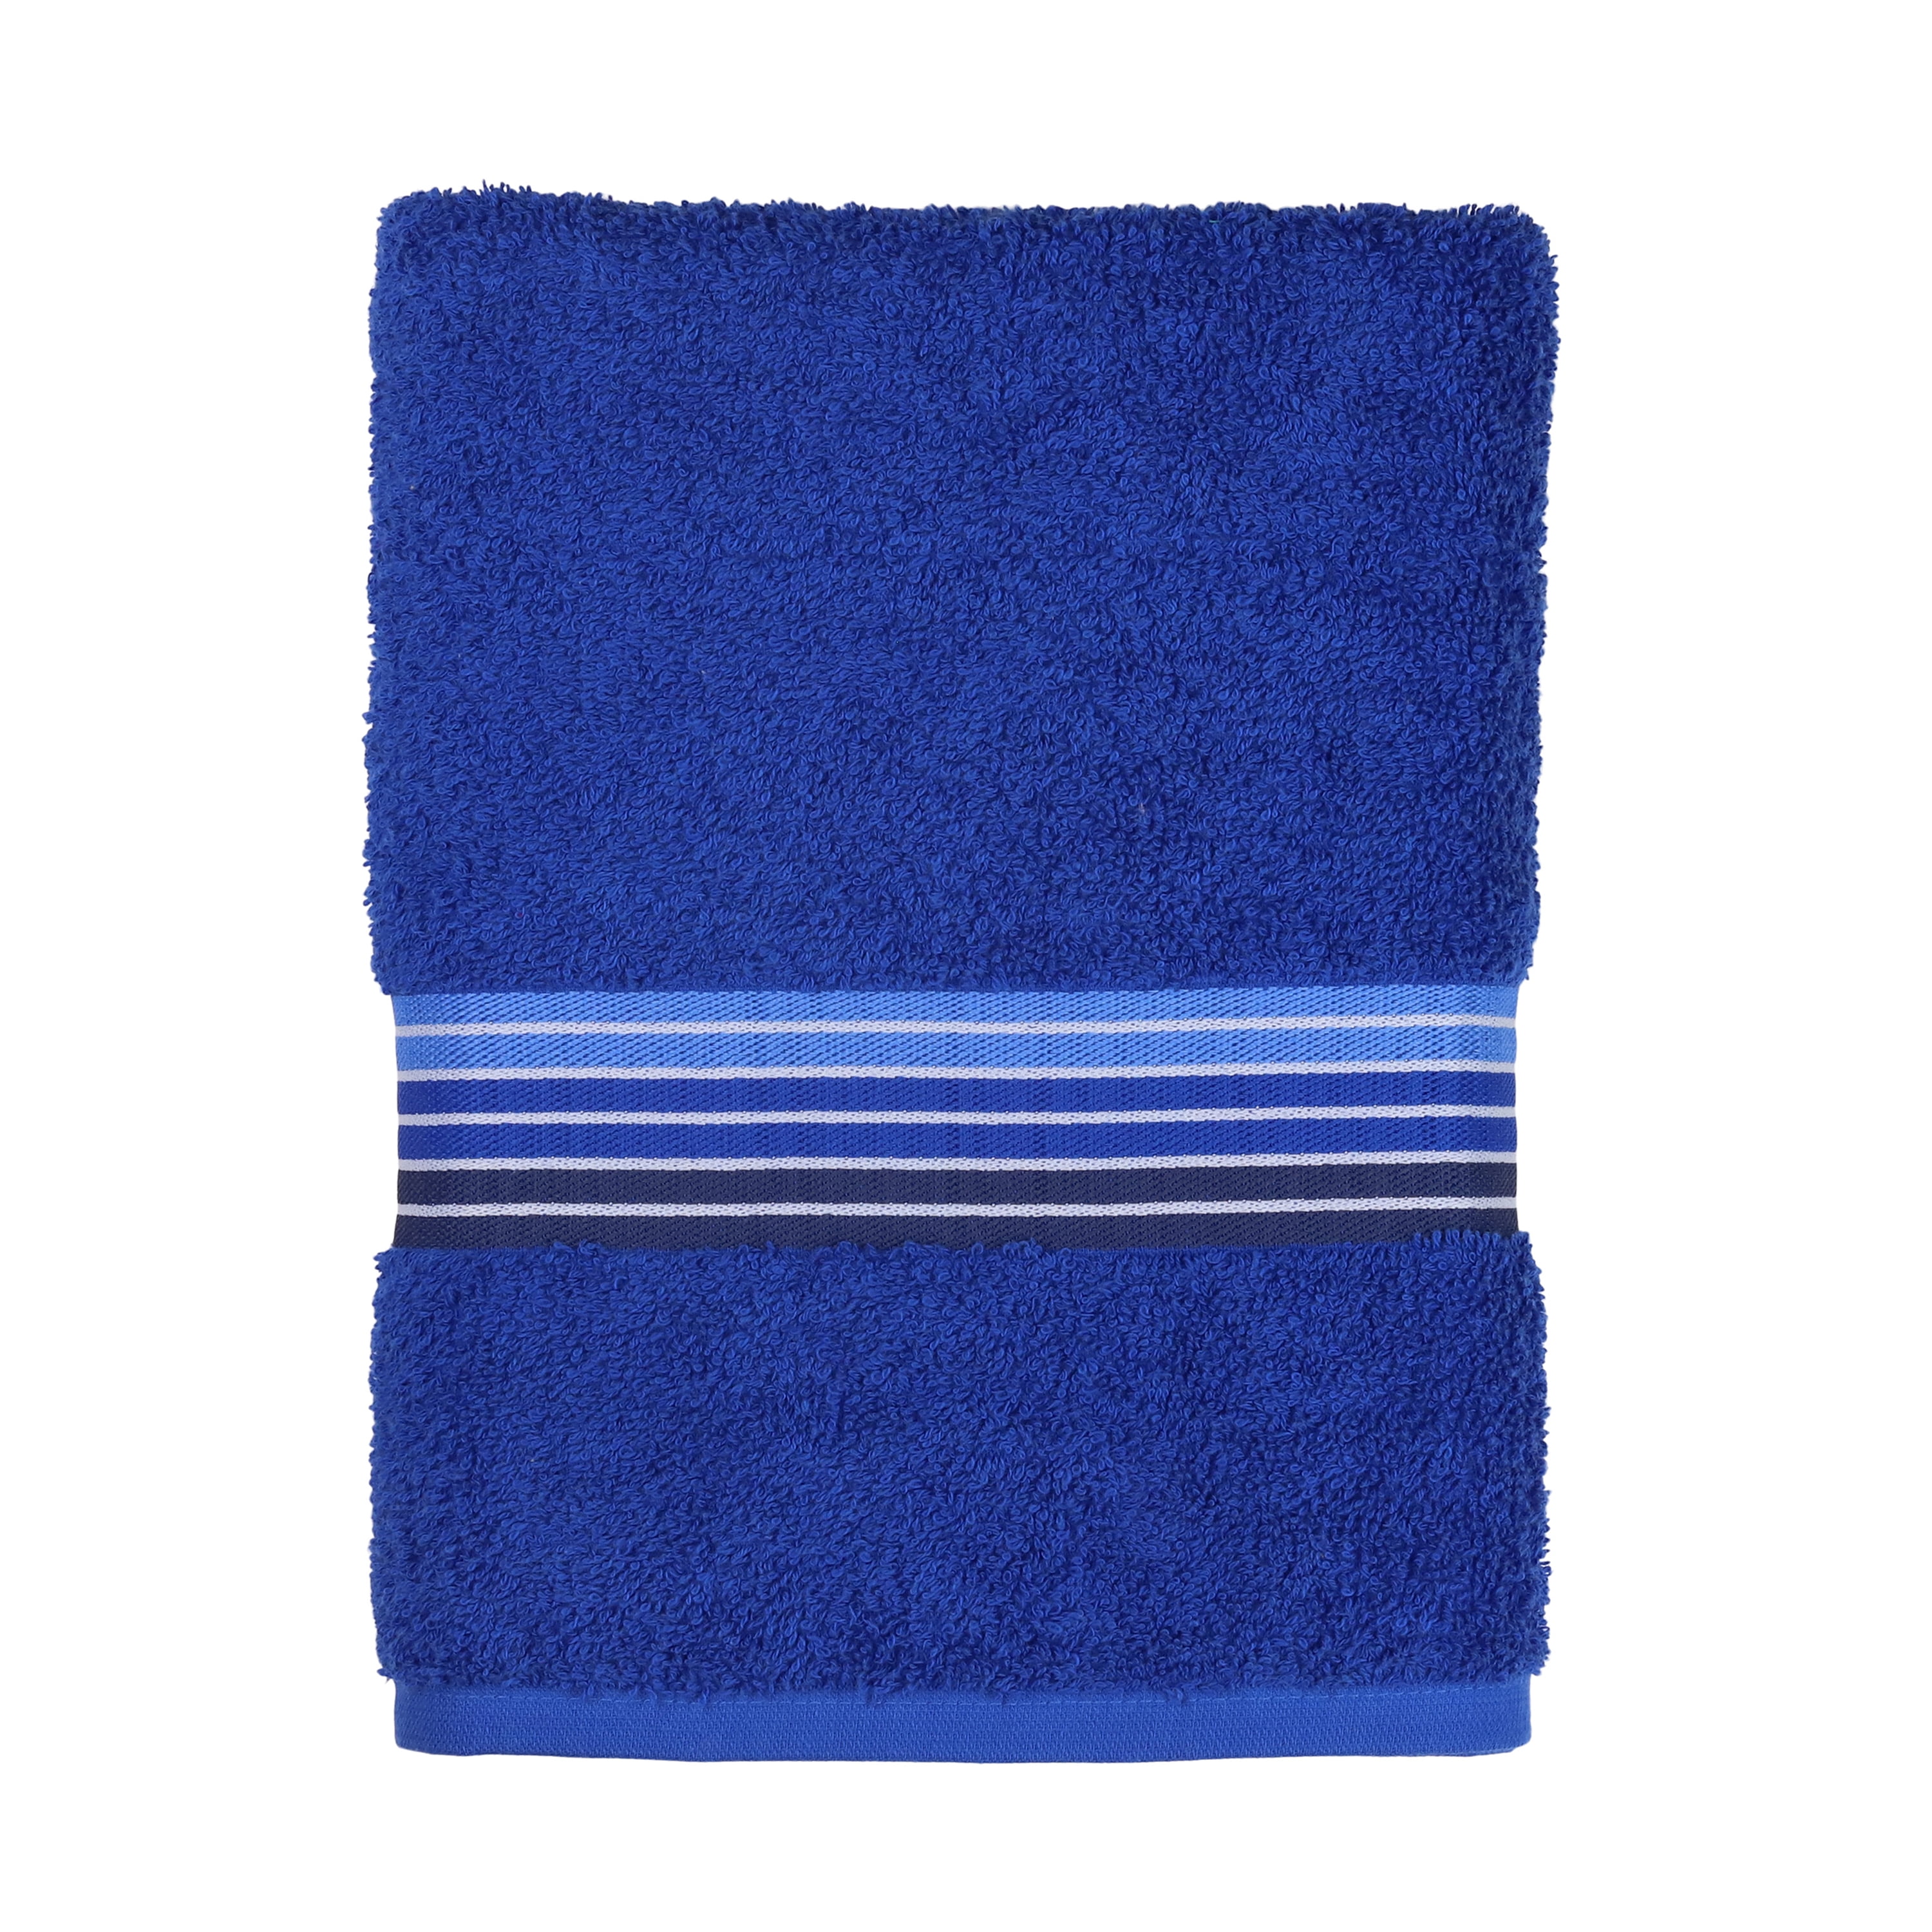 Mainstays Ombre Stripe Bath Towel, Royal Spice - Walmart.com